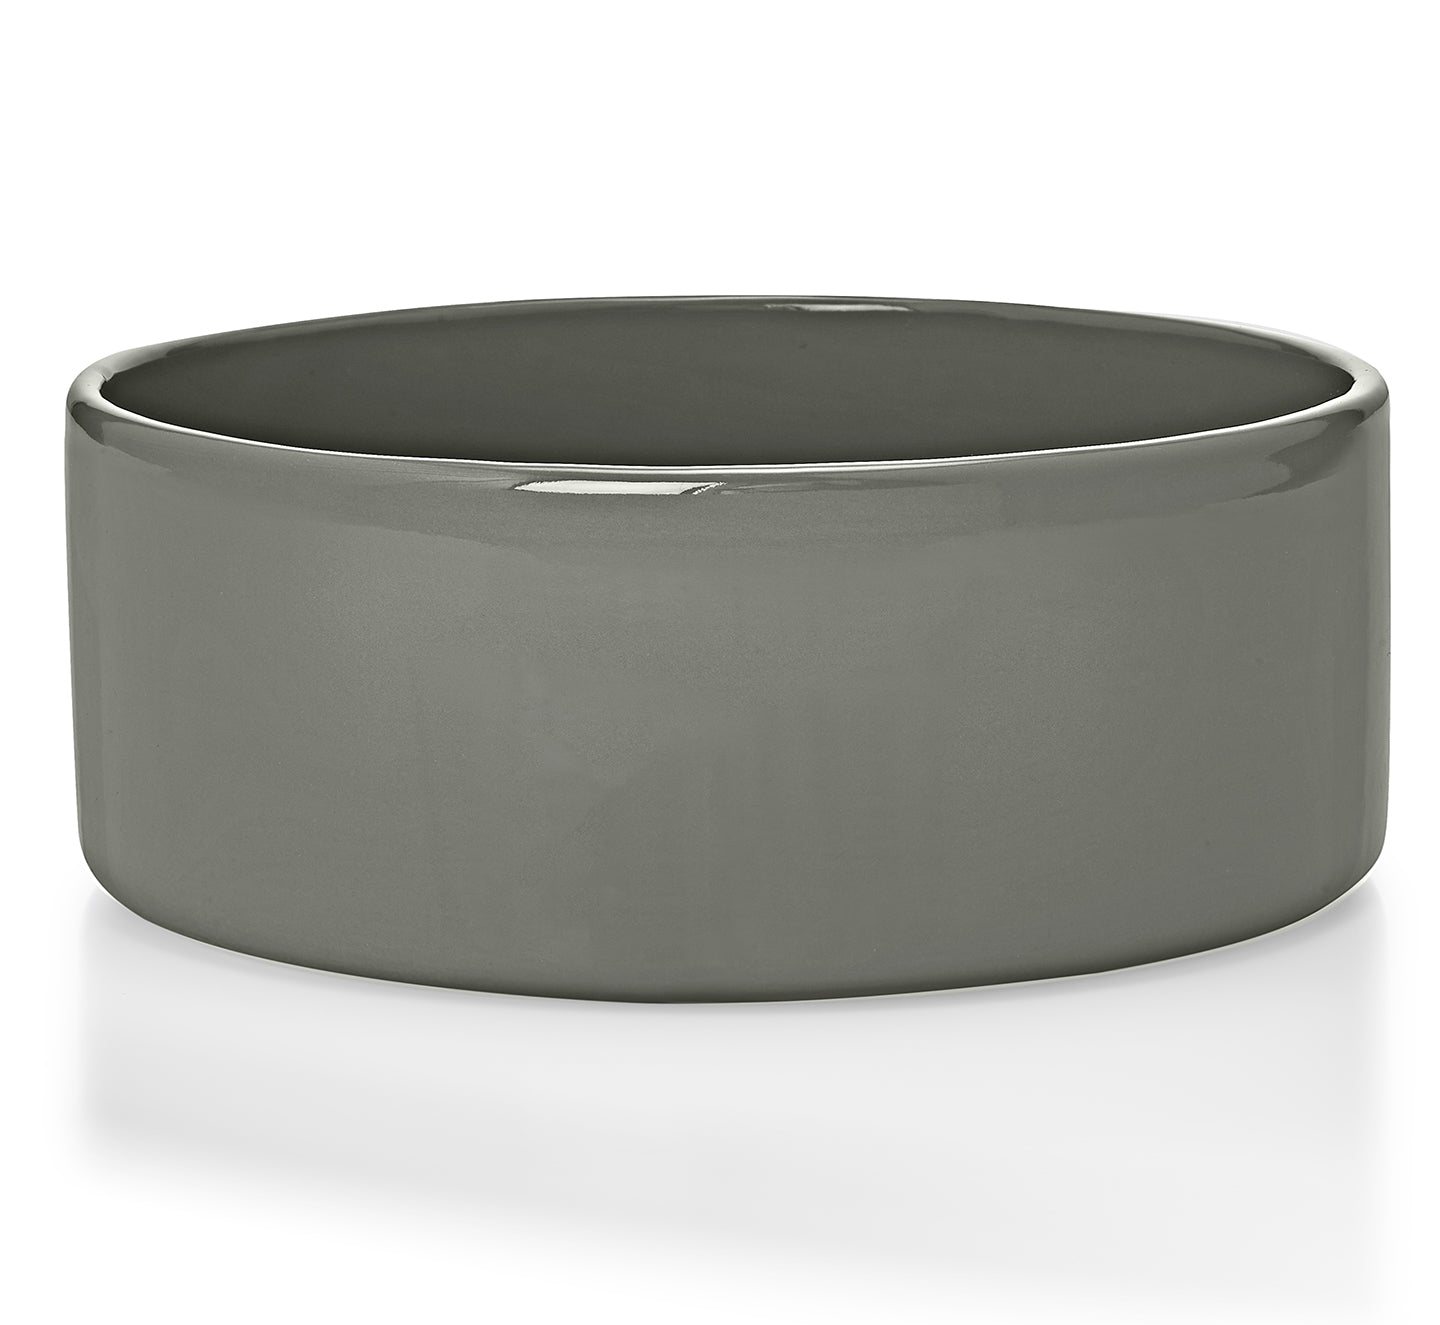 Designer dog bowl porcelain by Scodella - style meets function